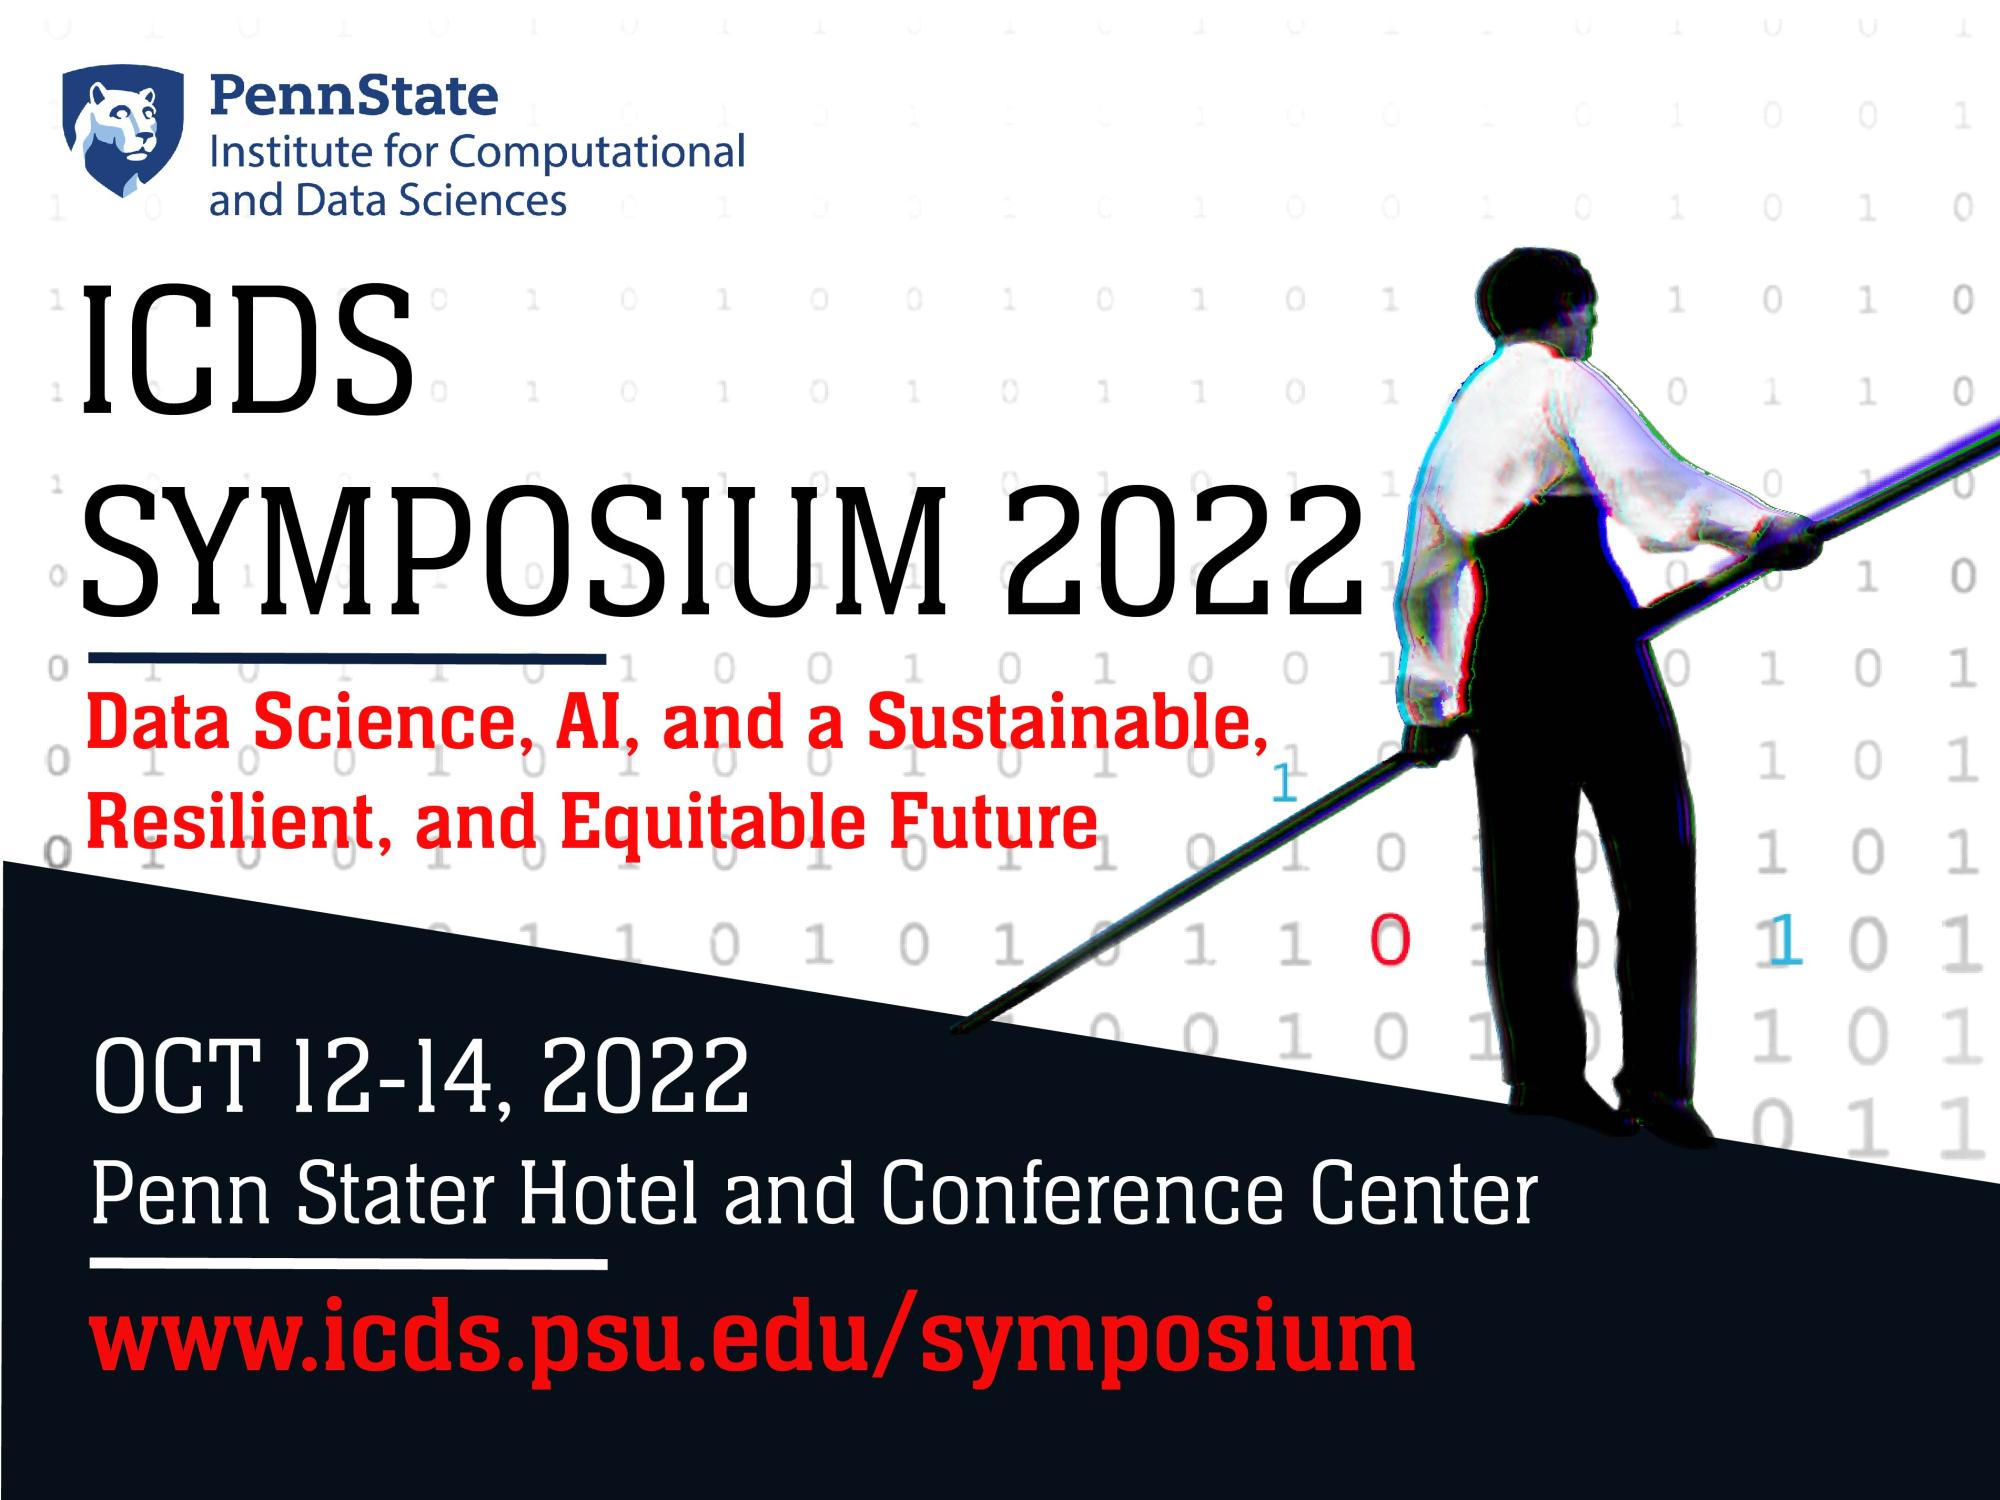 Institute for Computational and Data Sciences opens 2022 Symposium registration